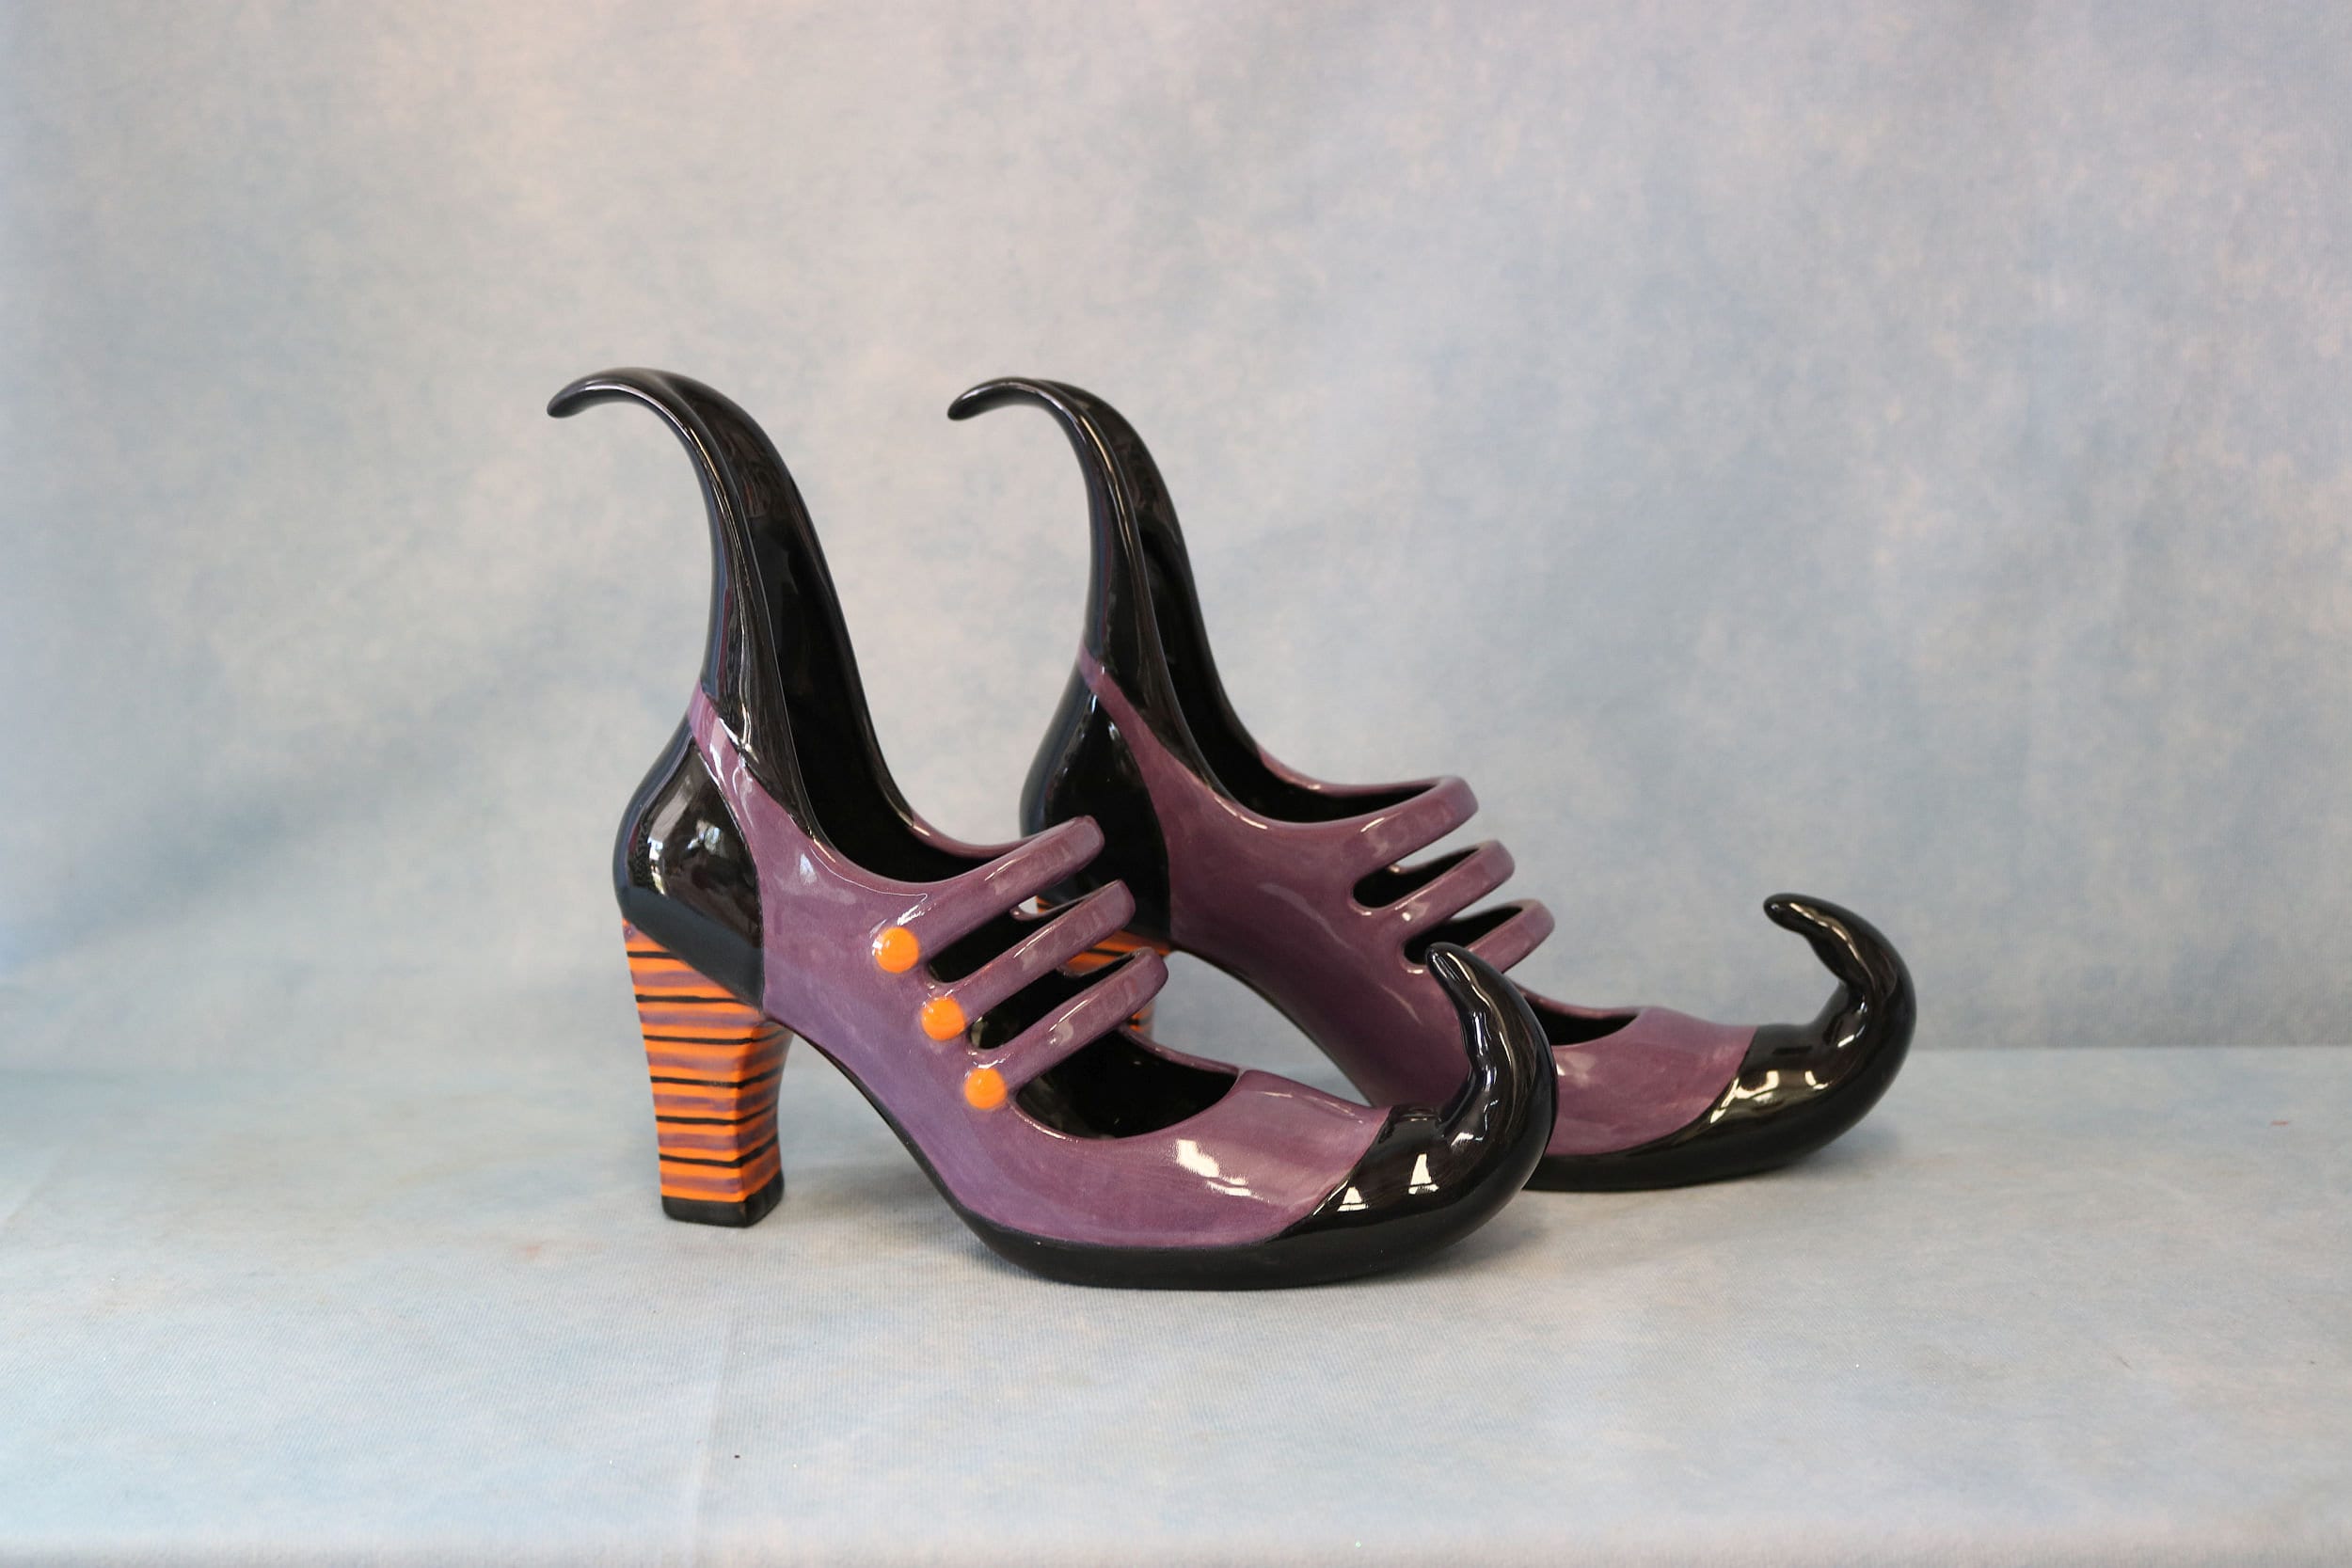 Vintage porcelain/ceramic shoe figurines - collectibles - by owner - sale -  craigslist